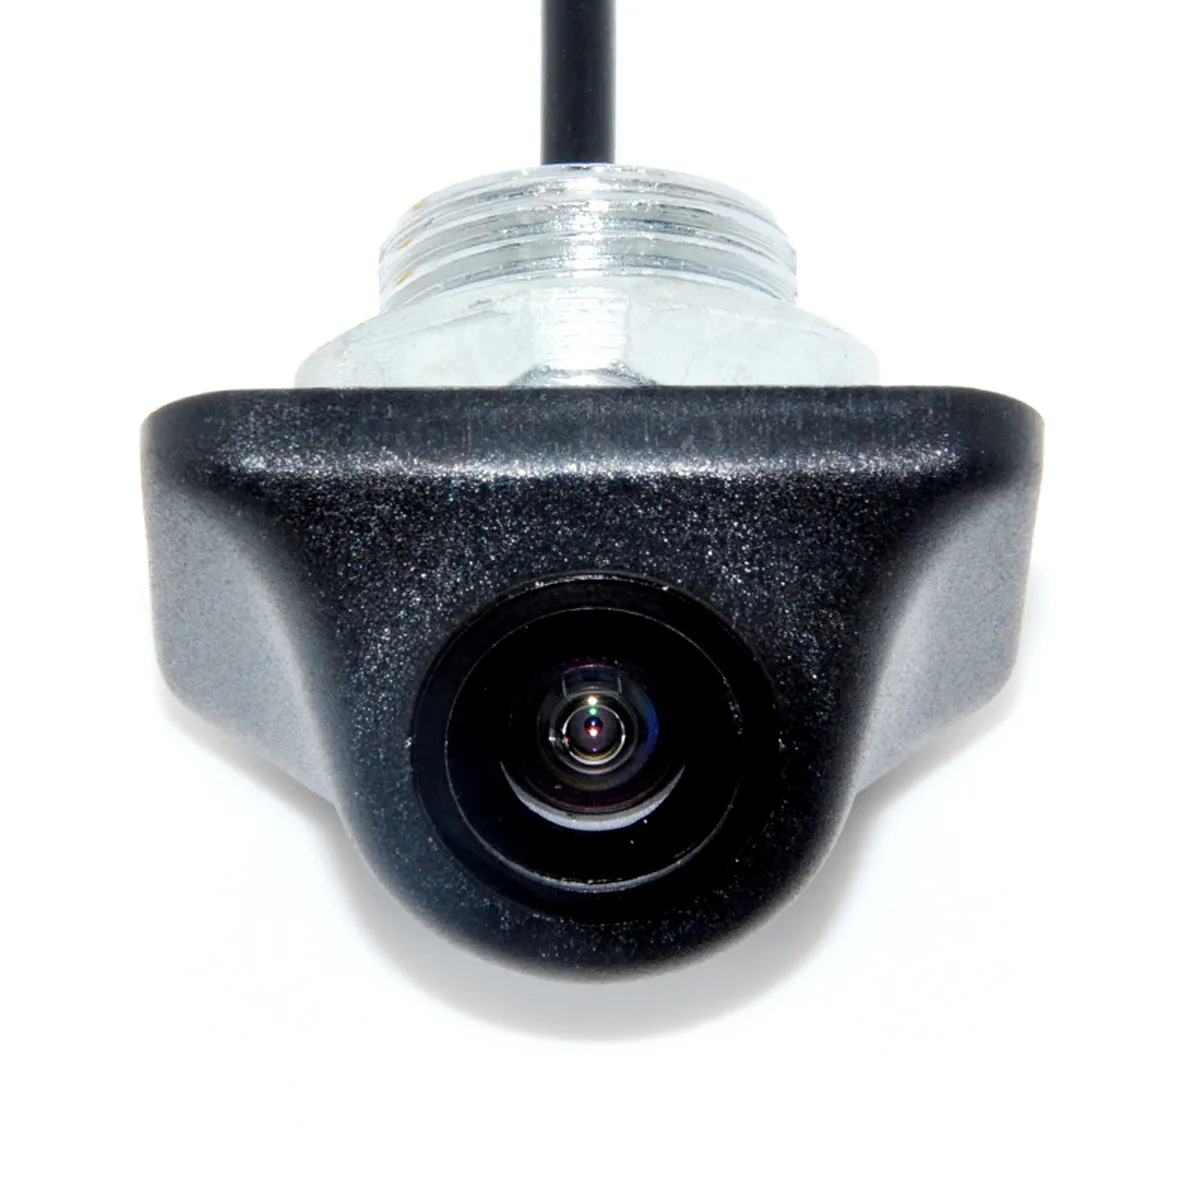 HD 170 زاوية واسعة للرؤية الليلية سيارة عكس النسخ الاحتياطي كاميرا الرؤية الخلفية وقوف السيارات العالمي للماء كاميرا الرؤية الخلفية